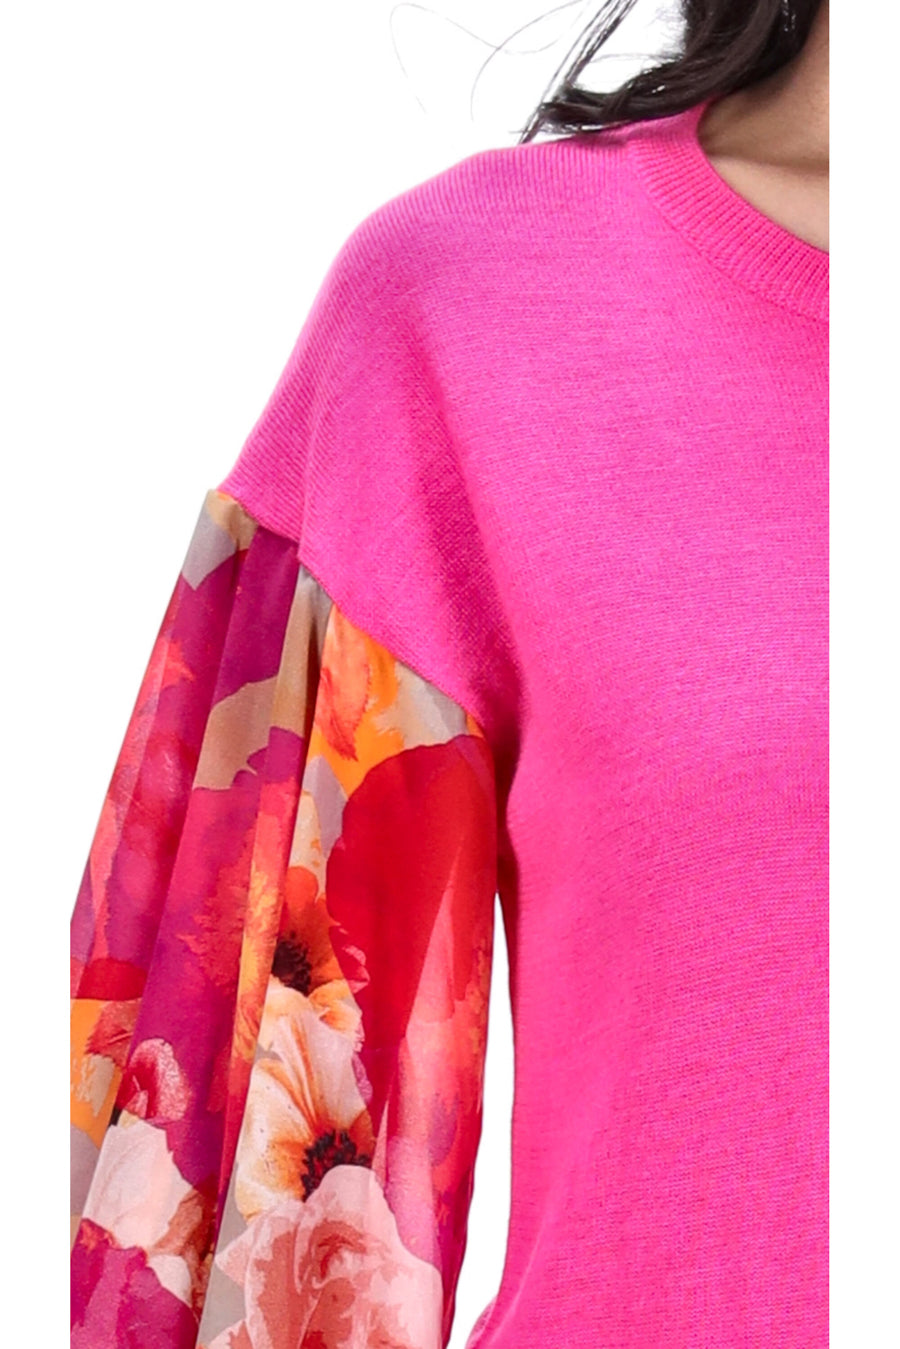 Augustine Nova Knit Top - Pink